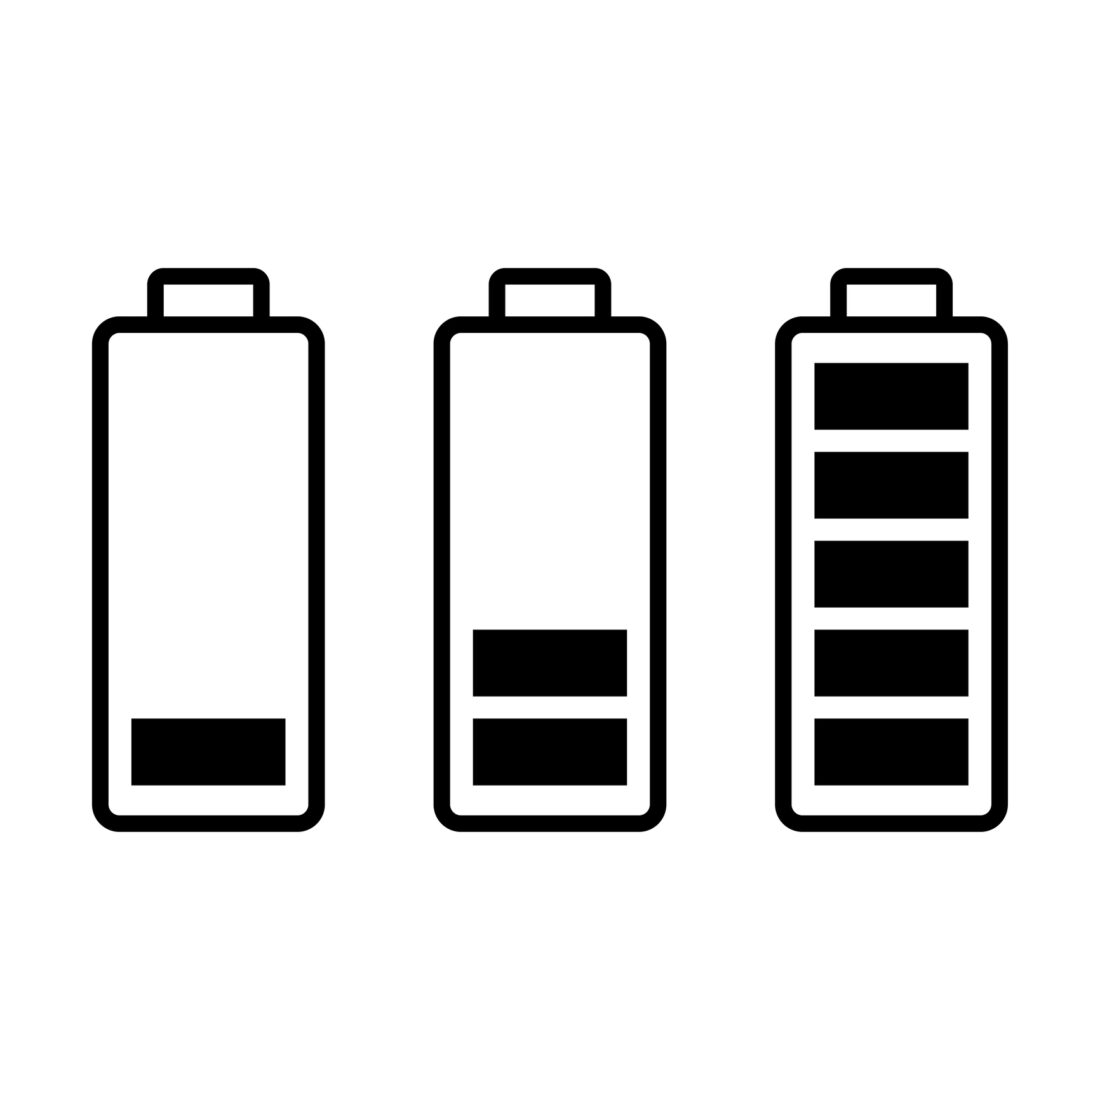 Battery Storage Icon